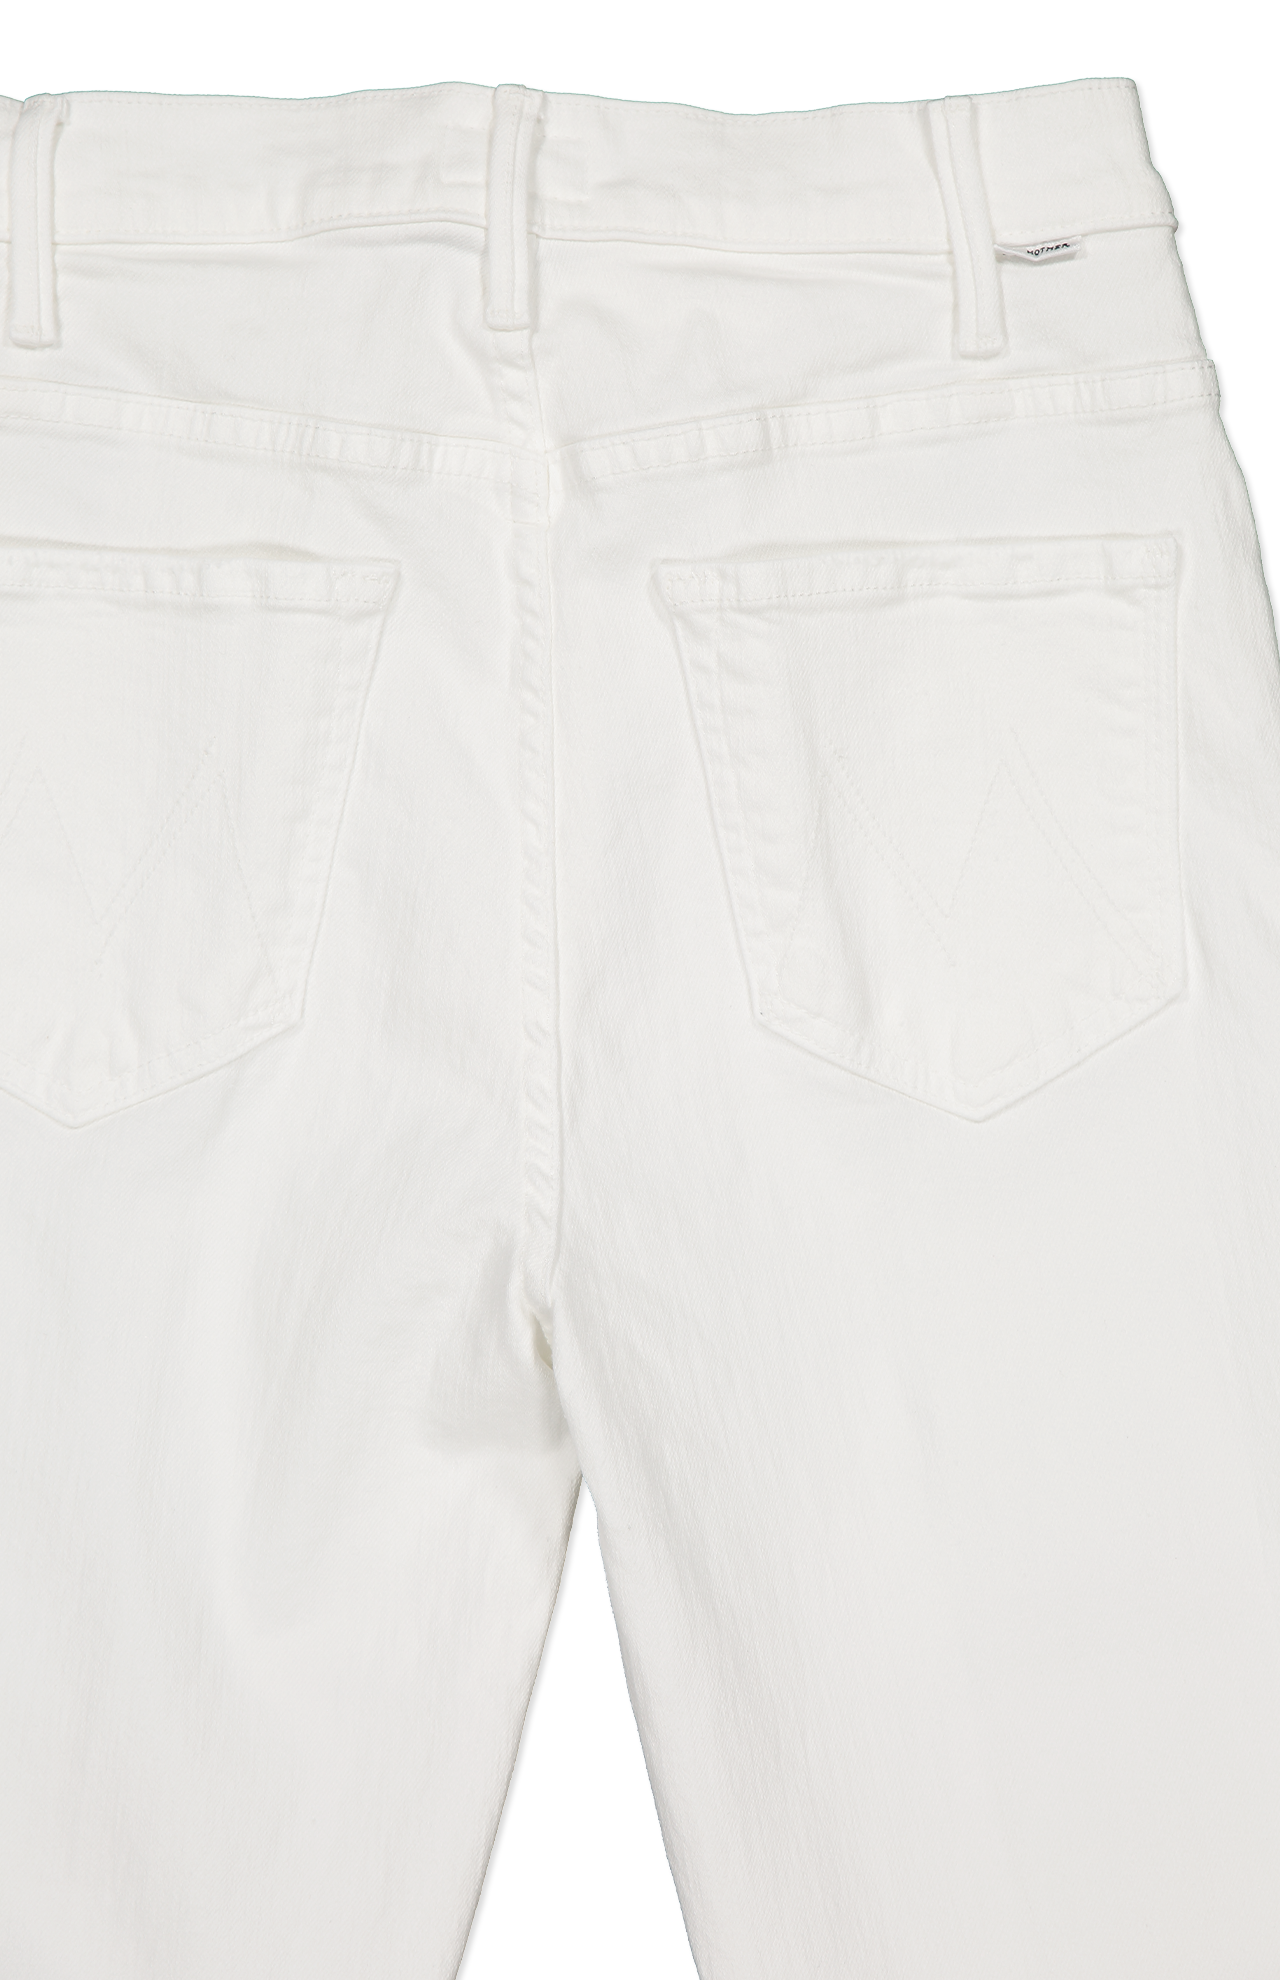 Mother The Hustler Ankle Fray Jeans White Back Pocket Detail Image (6856365604979)